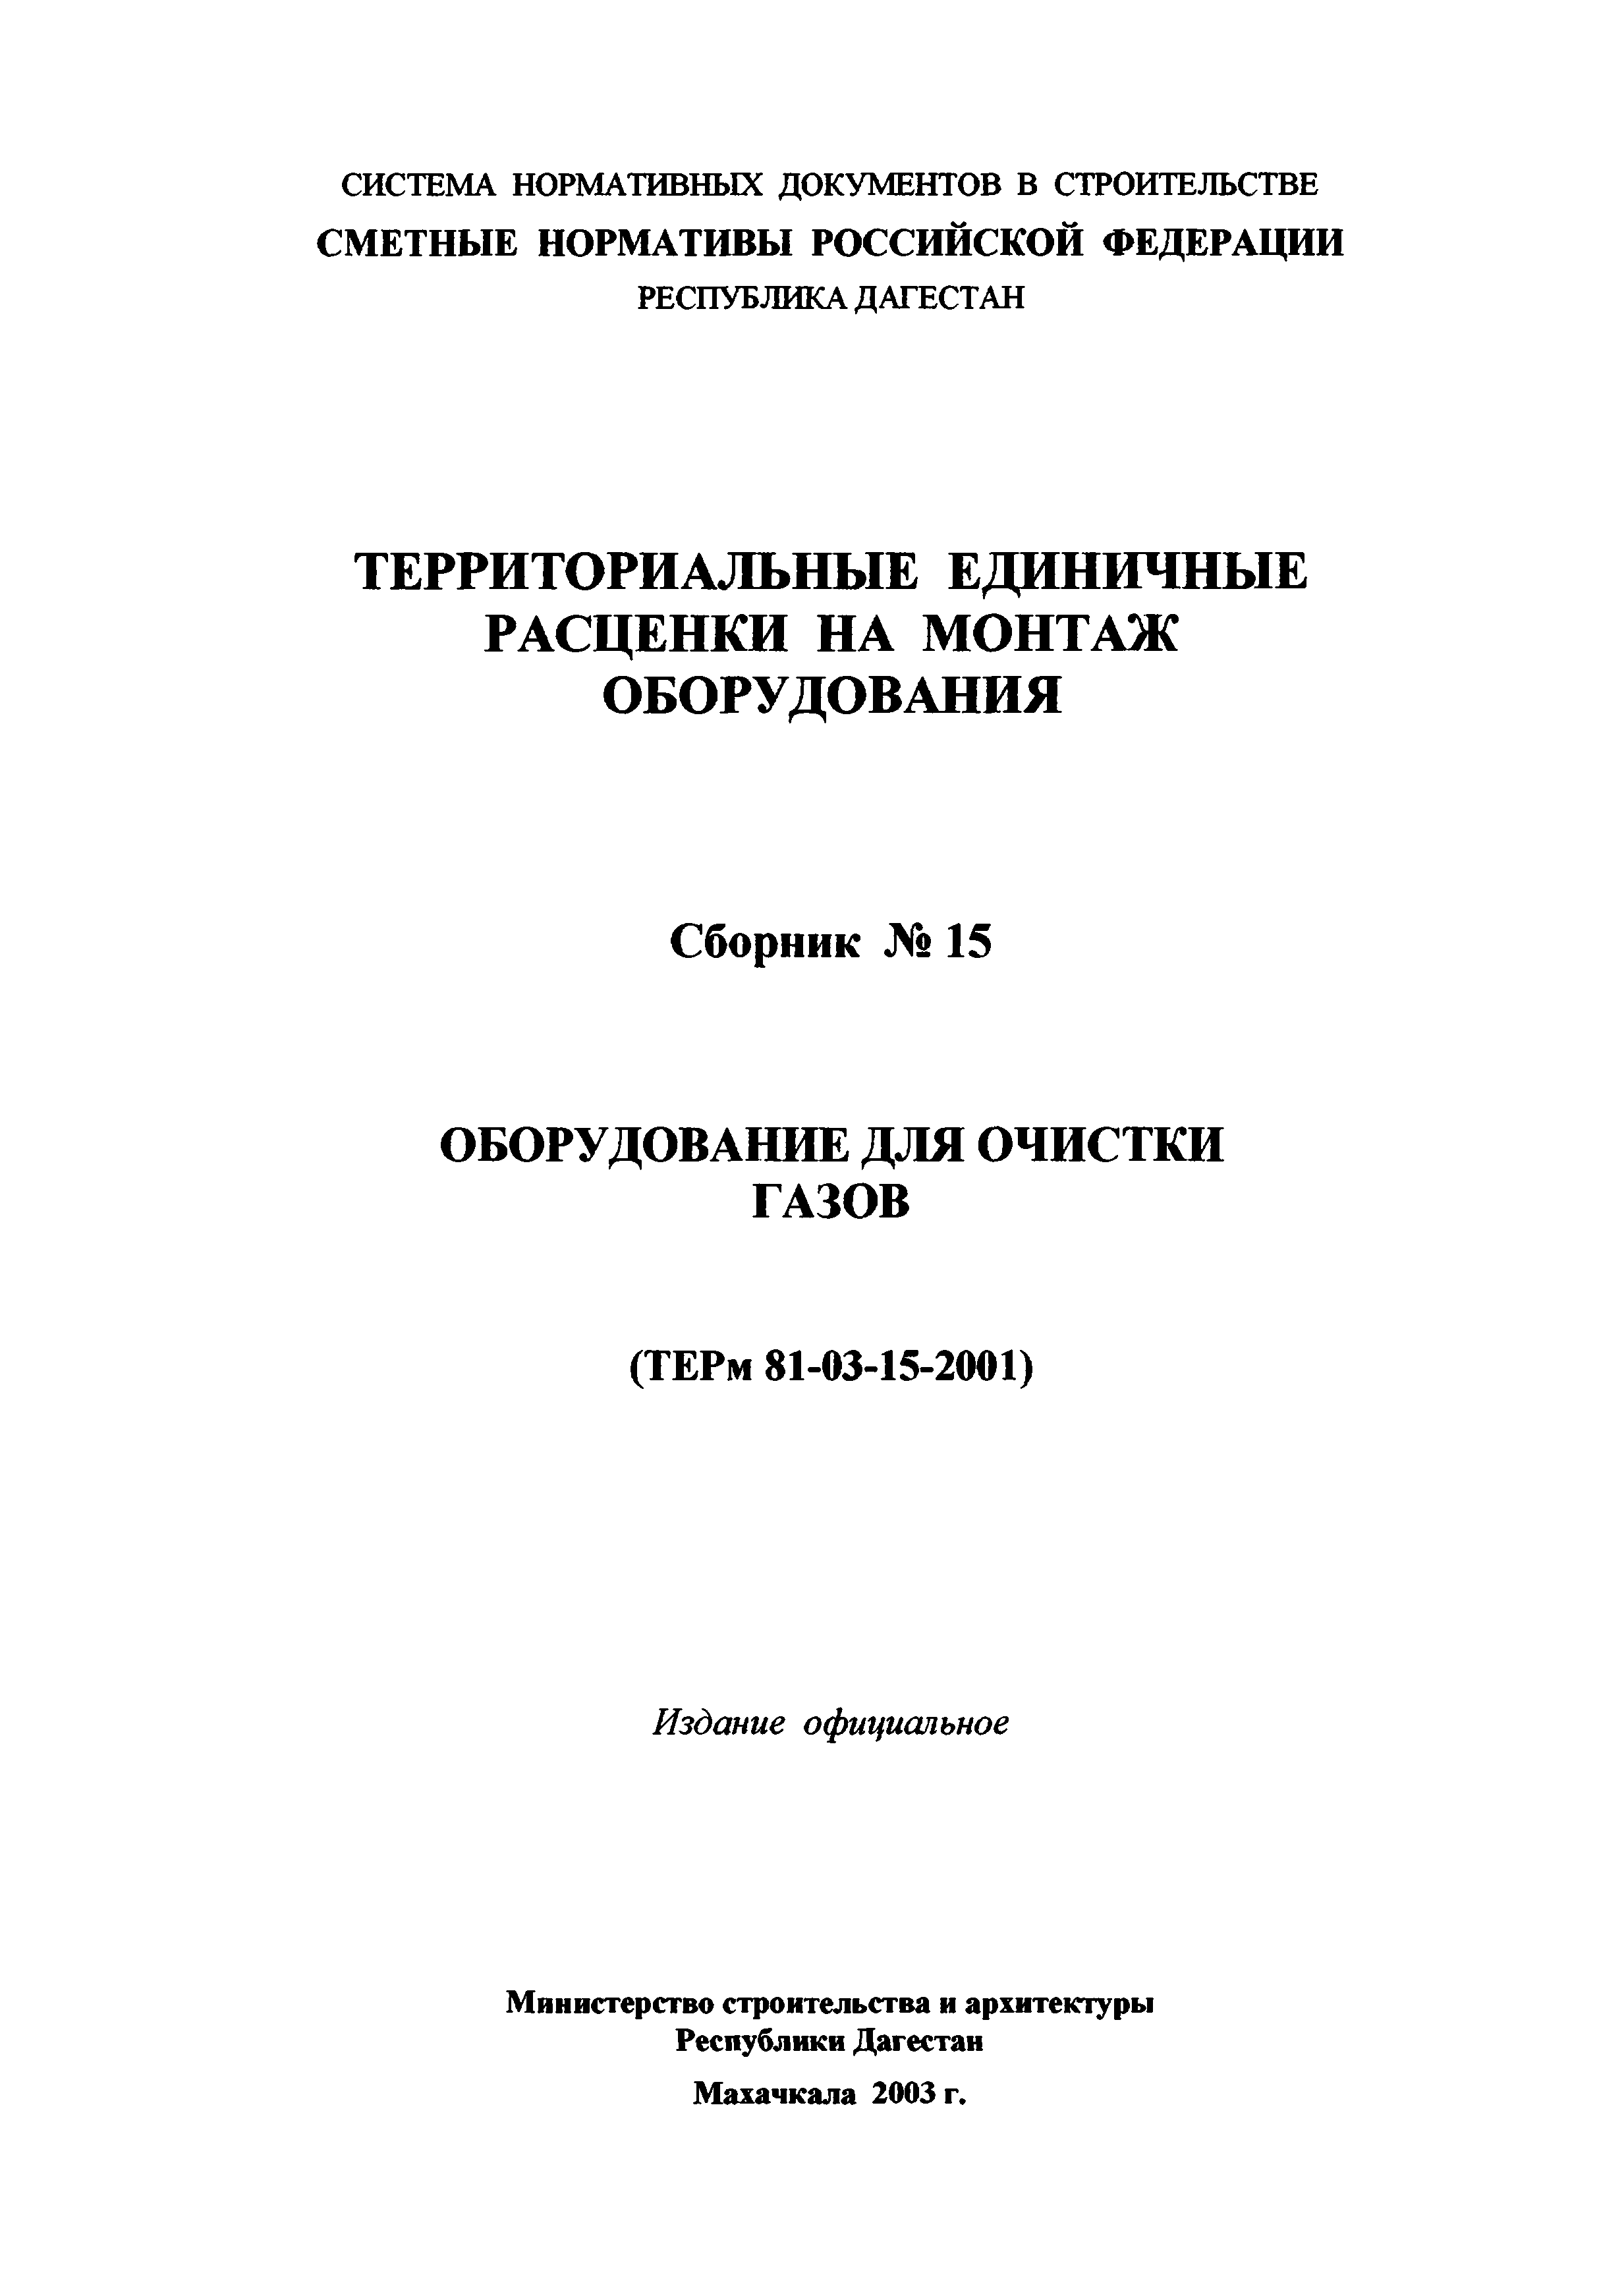 ТЕРм Республика Дагестан 2001-15